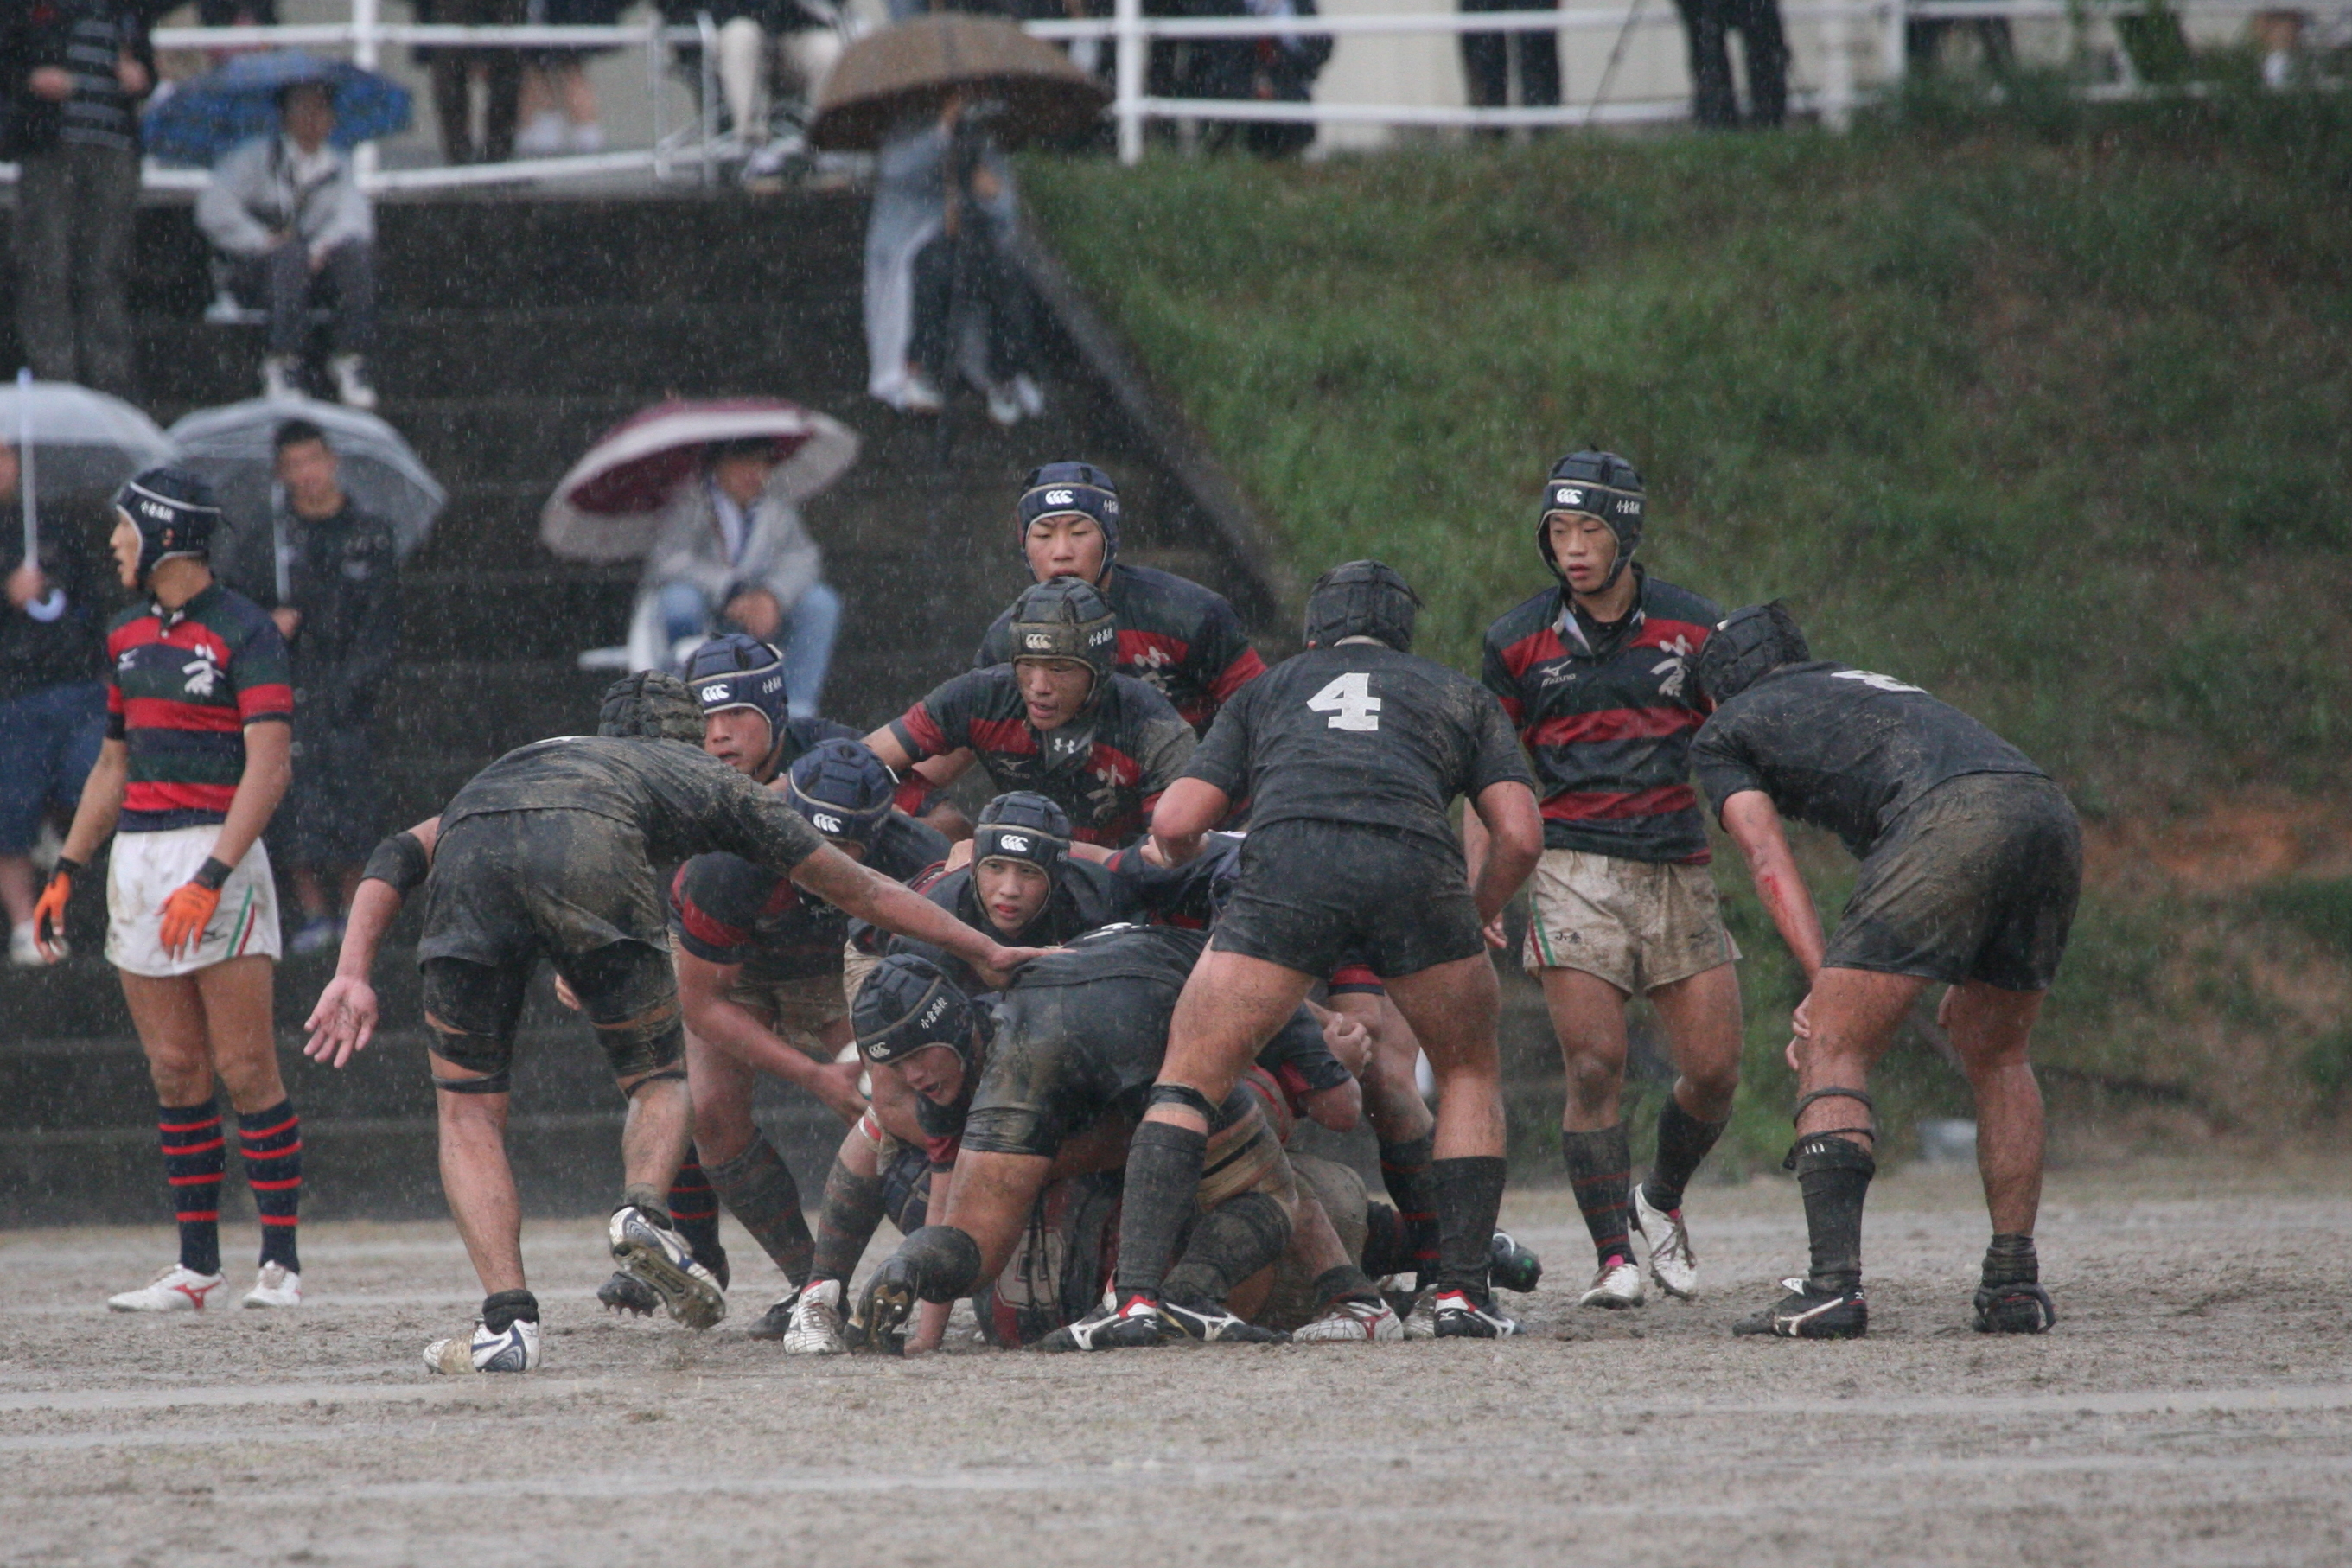 http://kokura-rugby.sakura.ne.jp/2011.10-30-21.JPG